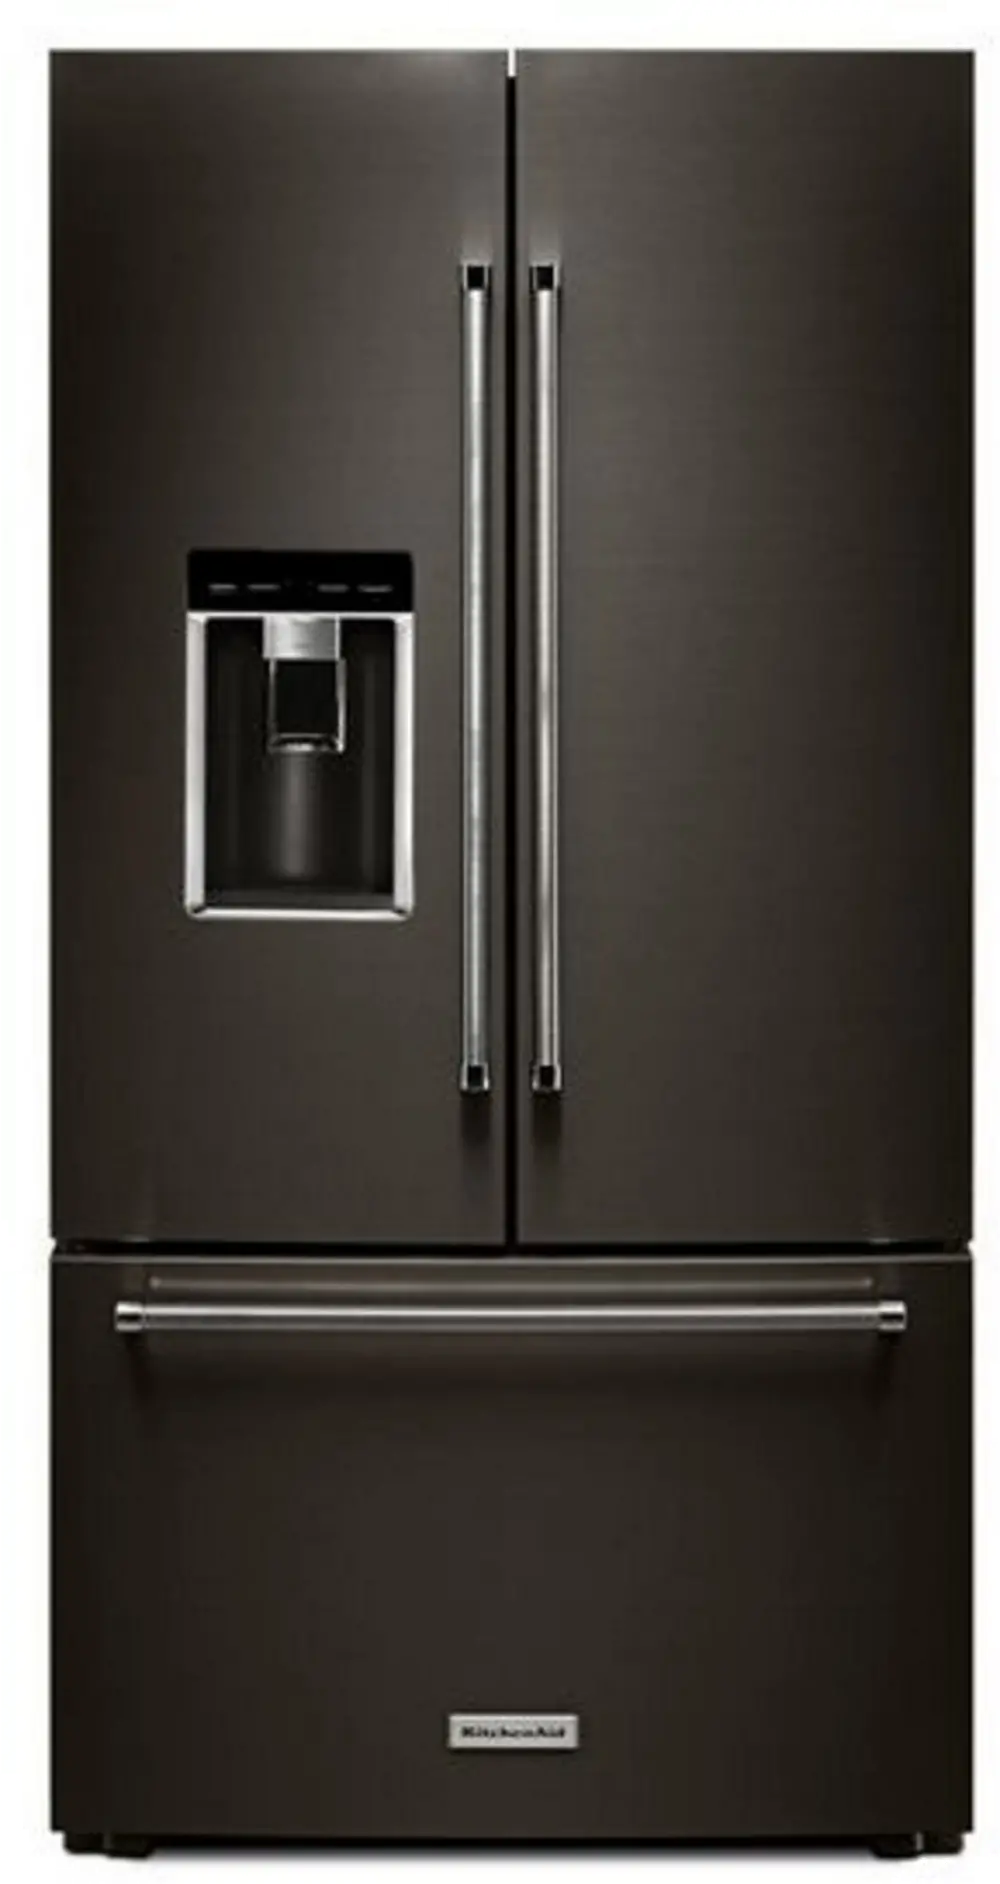 KRFC704FBS KitchenAid 23.8 cu ft French Door Refrigerator - Counter Depth Black Stainless Steel-1